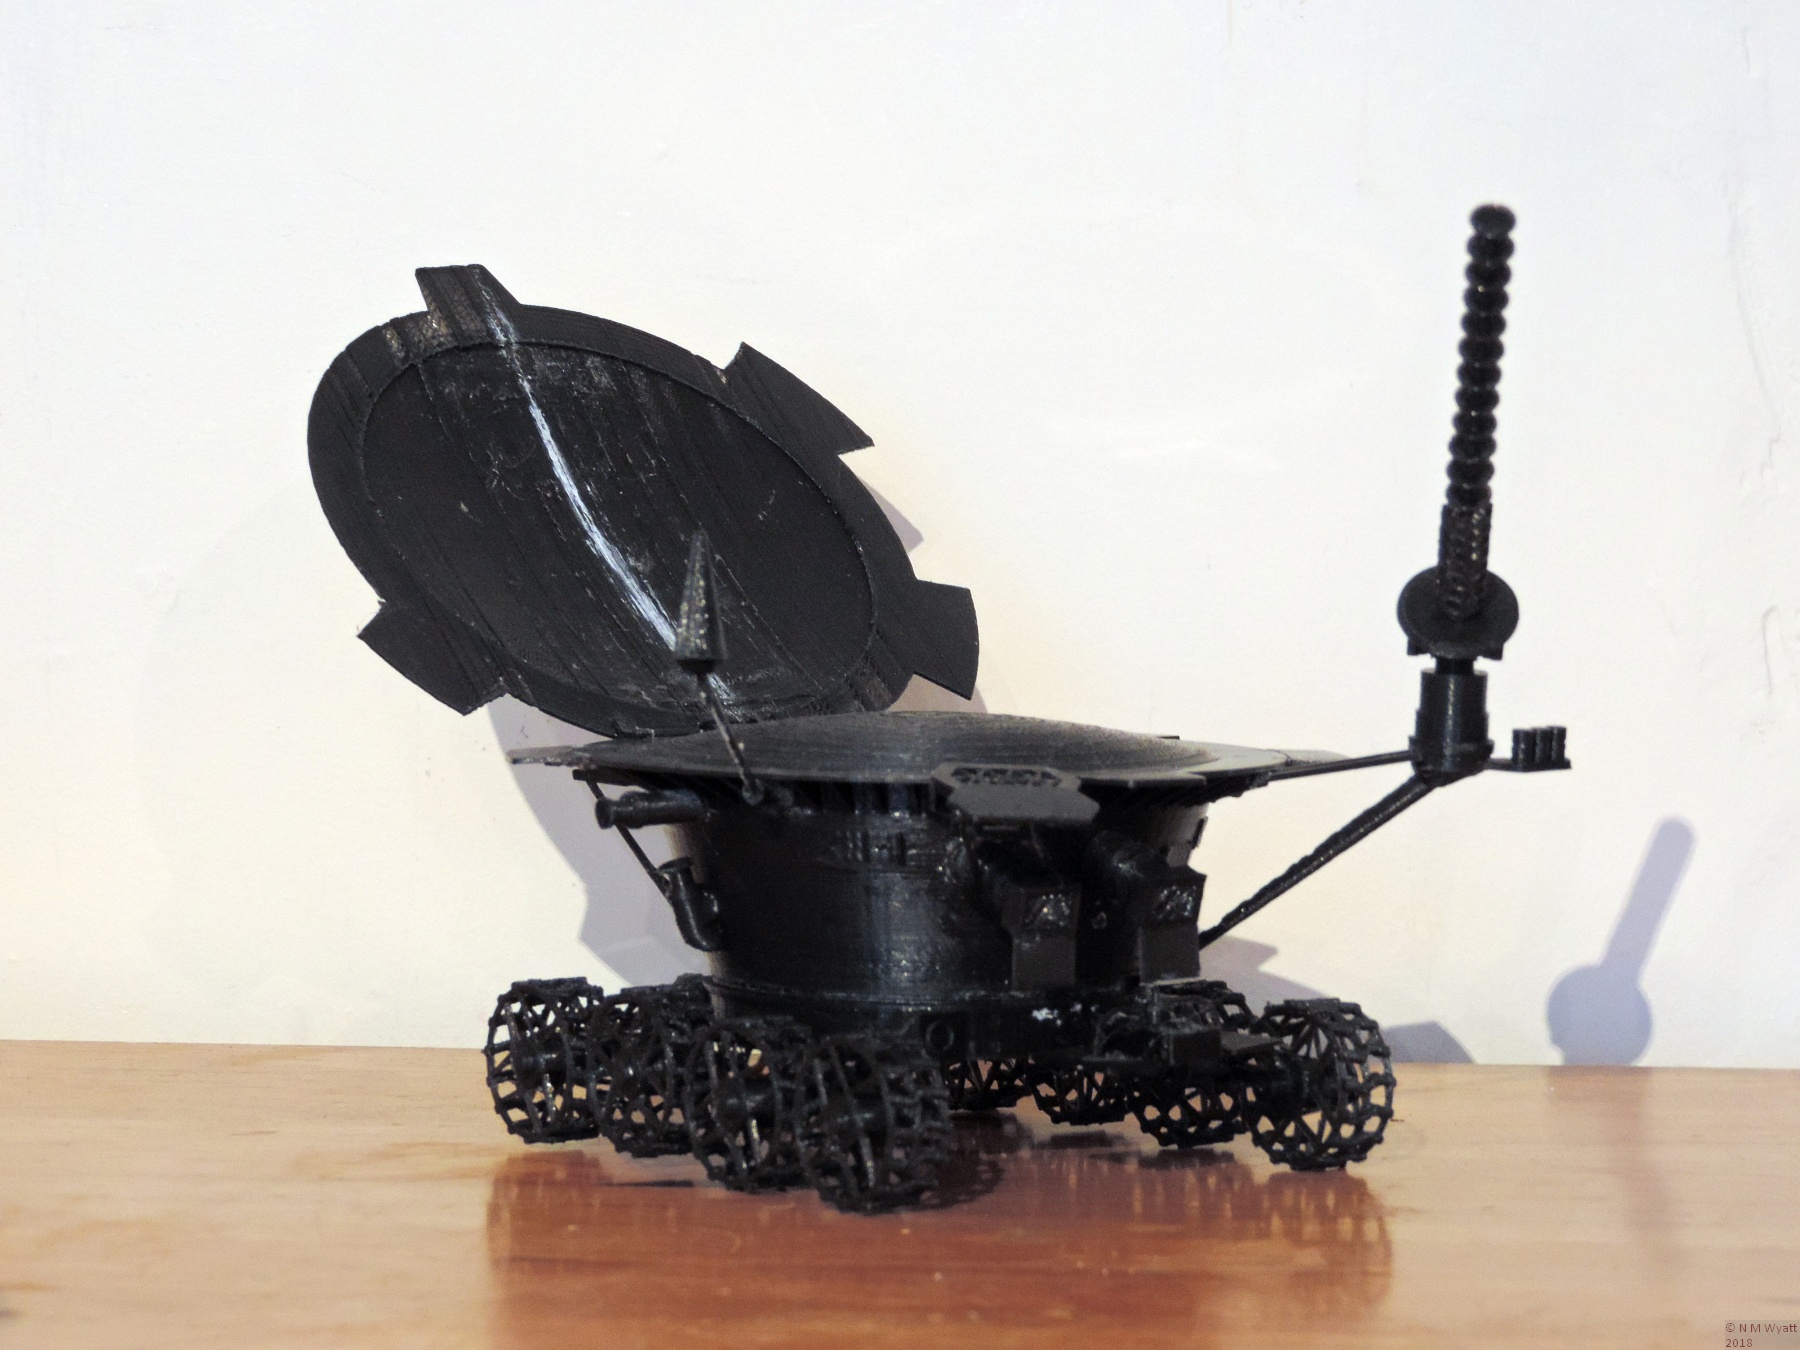 3d printed model of Lunokhod 1